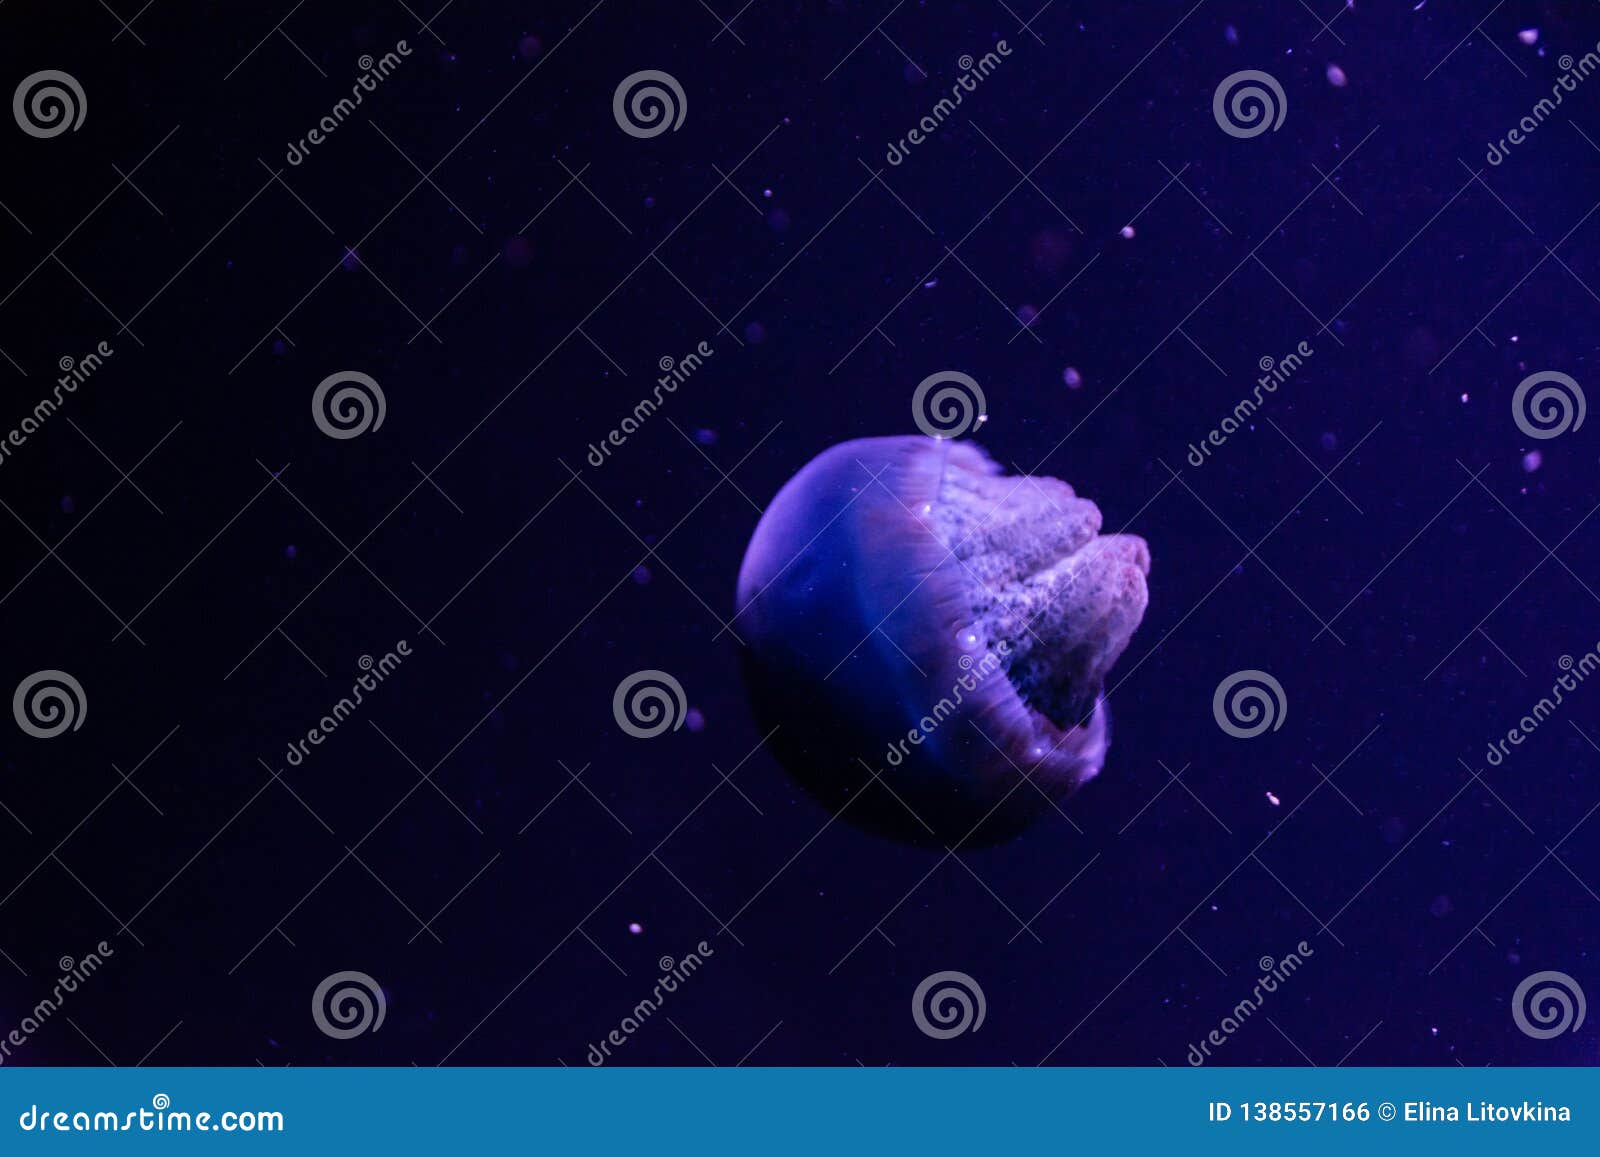 Jellyfish in blue light